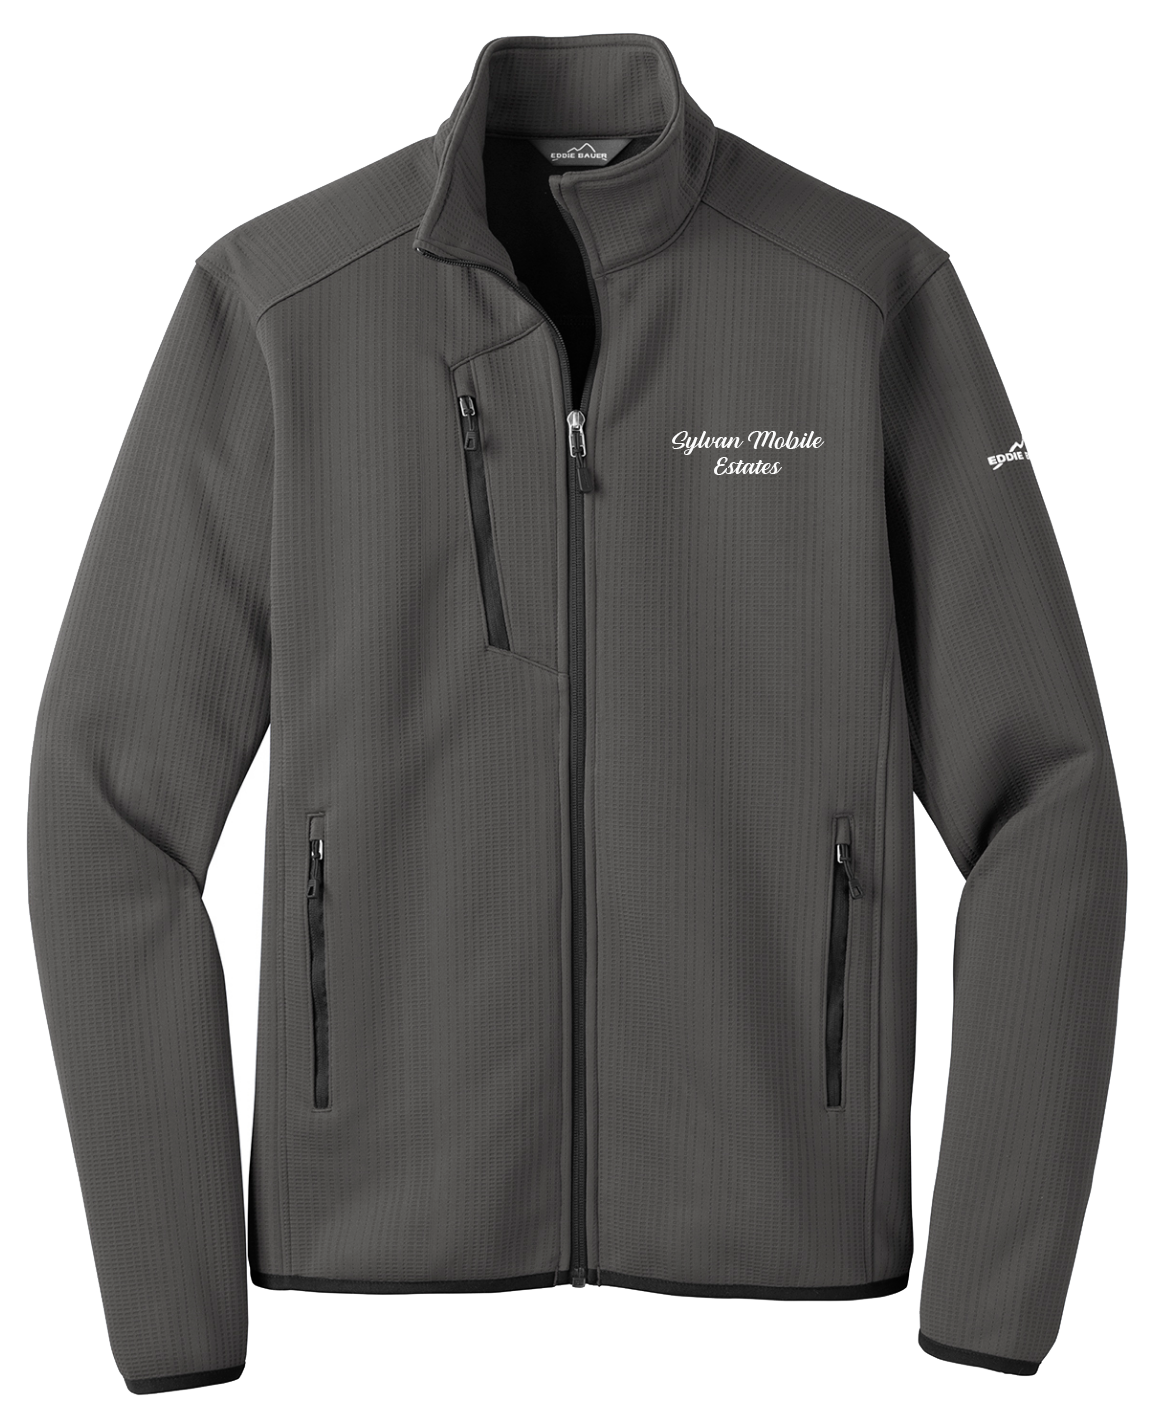 Sylvan Mobile Estates - Mens - Eddie Bauer ® Dash Full-Zip Fleece Jacket